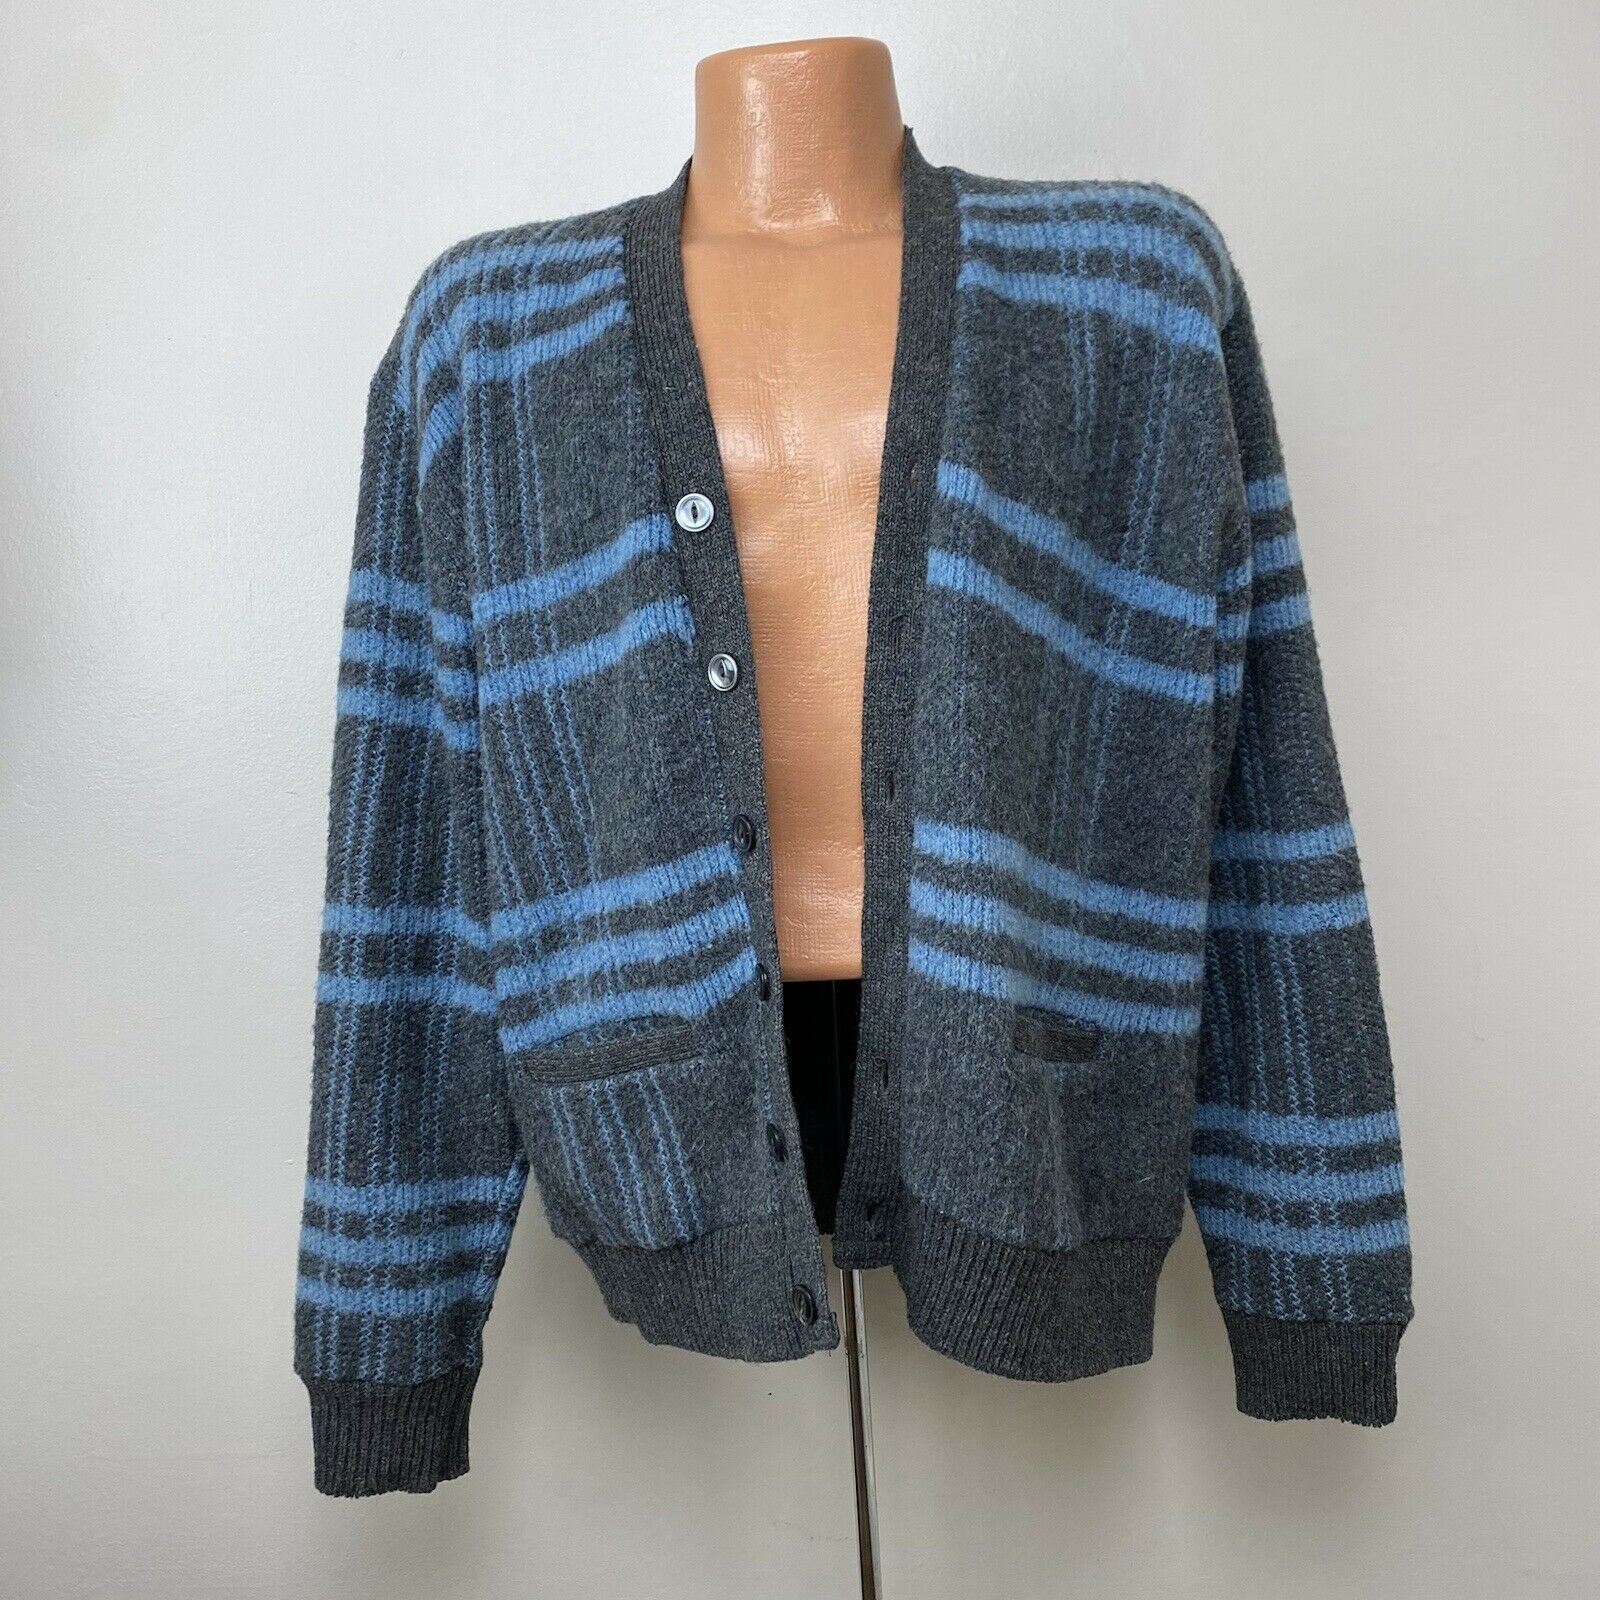 1960s Plaid Mohair Cardigan Sweater, Sears Sportswear Size Large